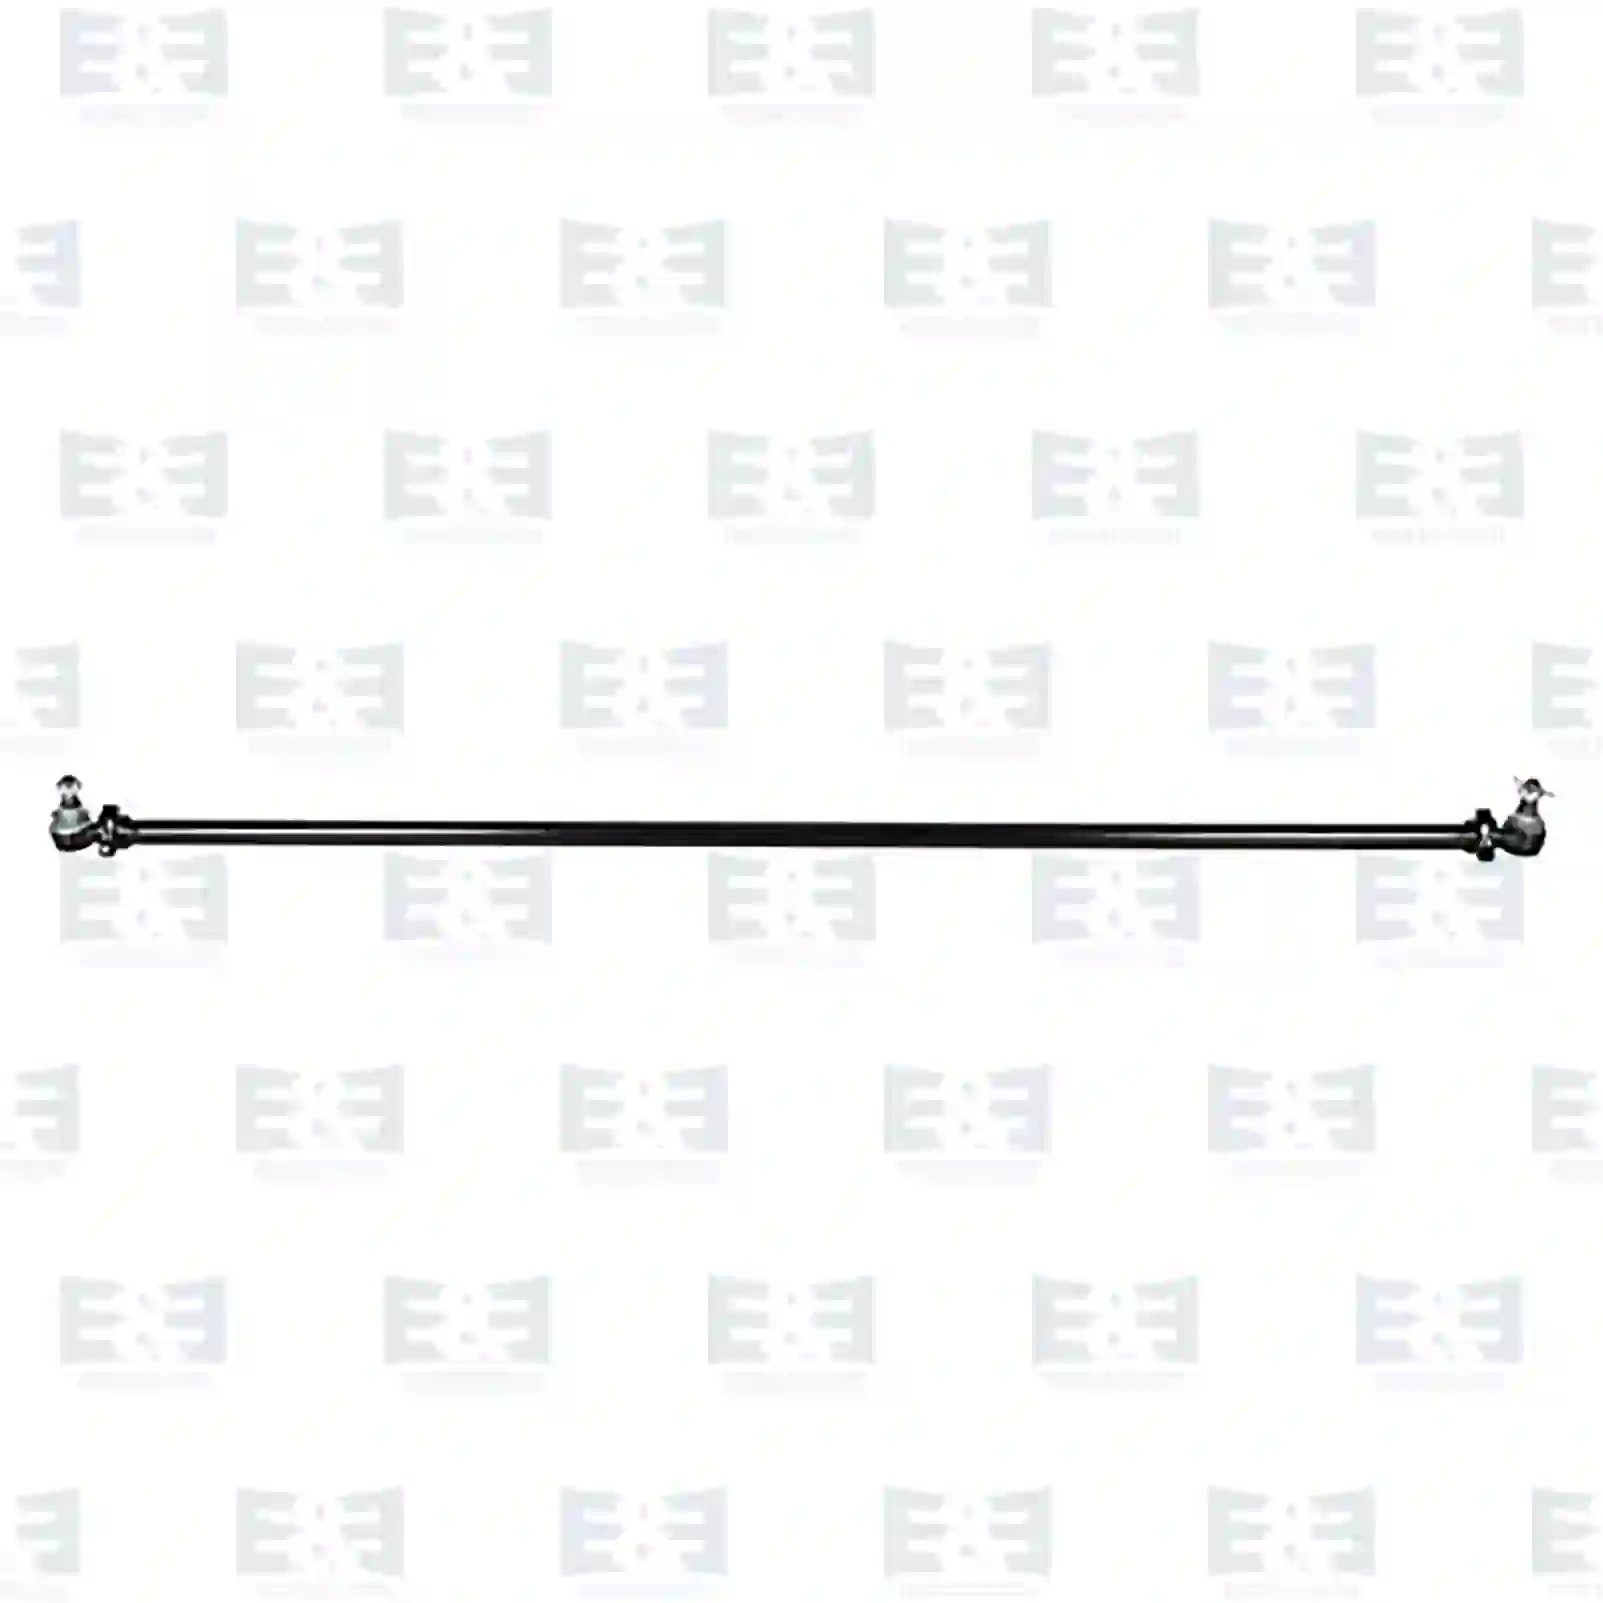  Track rod || E&E Truck Spare Parts | Truck Spare Parts, Auotomotive Spare Parts